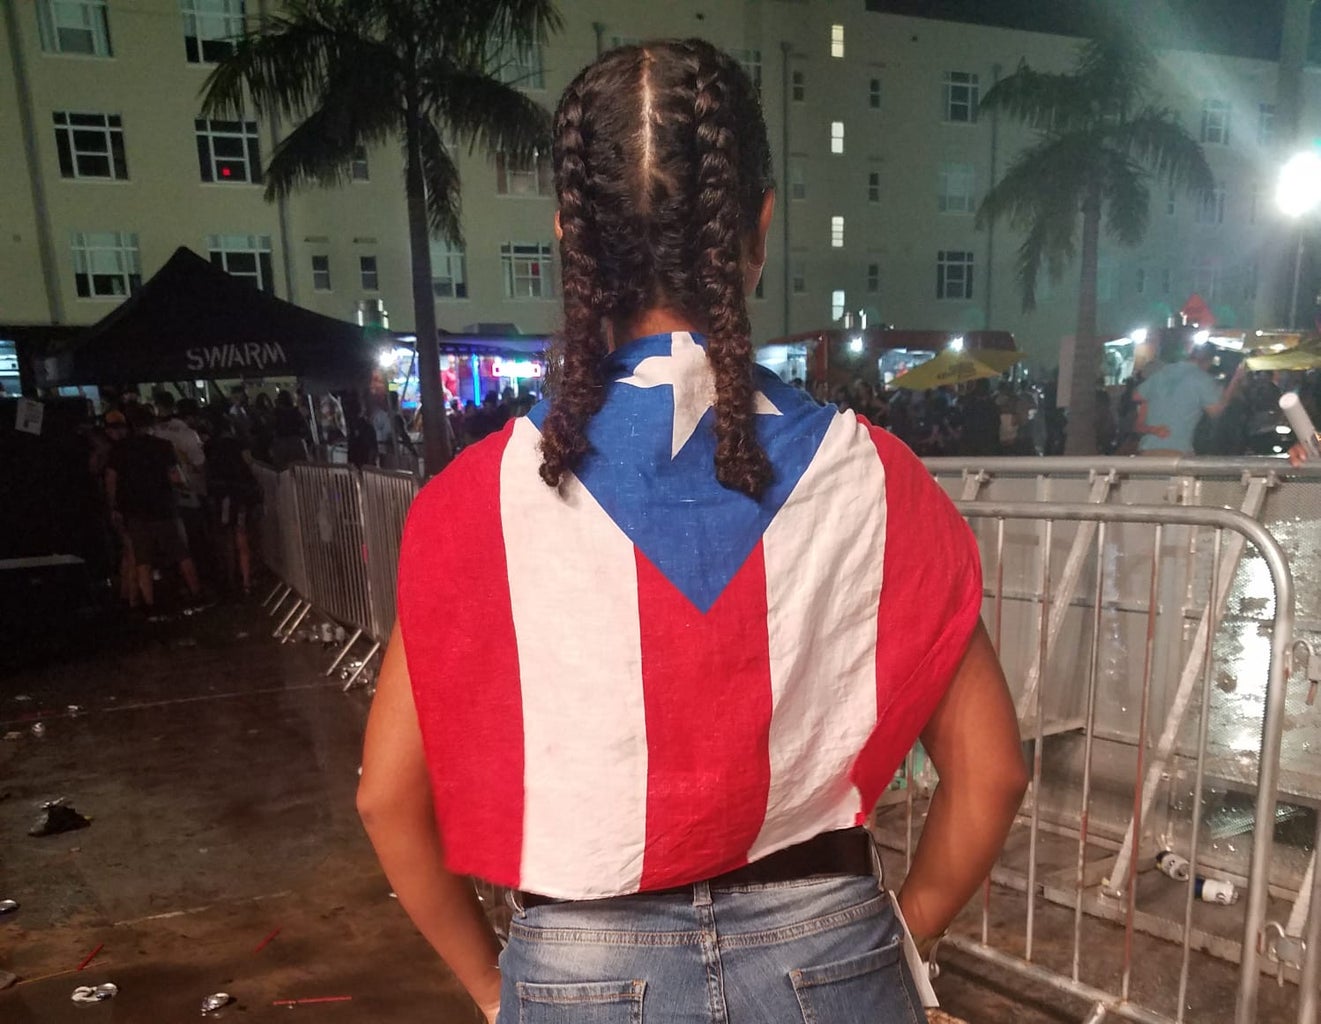 Gabriella Alexander with Puerto Rican flag cape